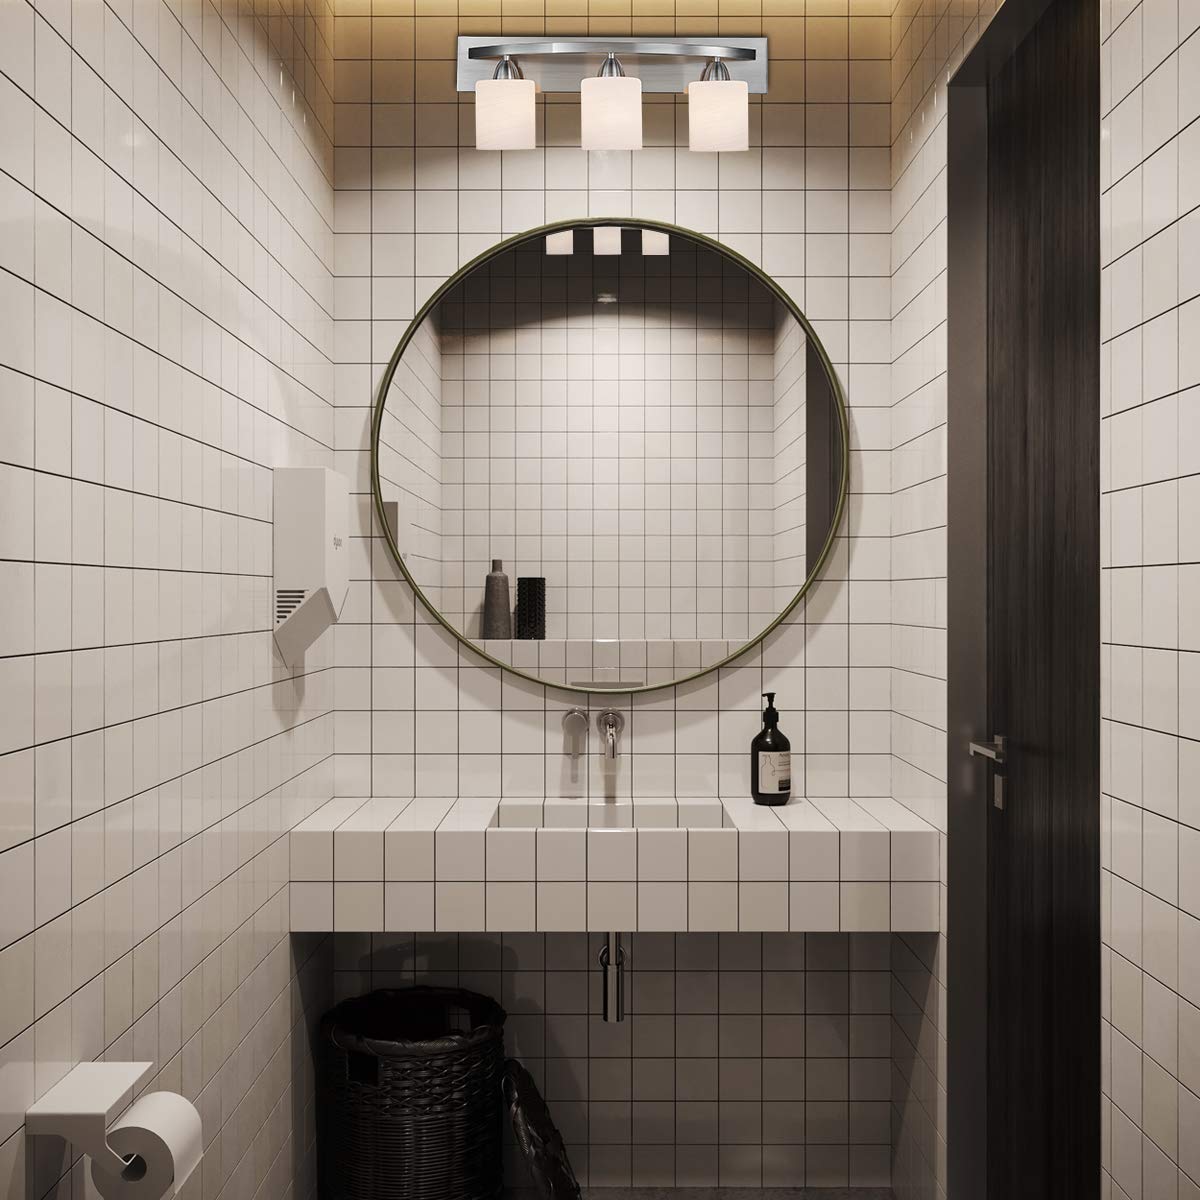 ANJIADENGSHI Bathroom Vanity Lamp Sand Nickel Wall Mounted Vanity Lighting Fixture with White Glass Shade Wall Sconce Pendant Lamp (Nickel, 3*E26)